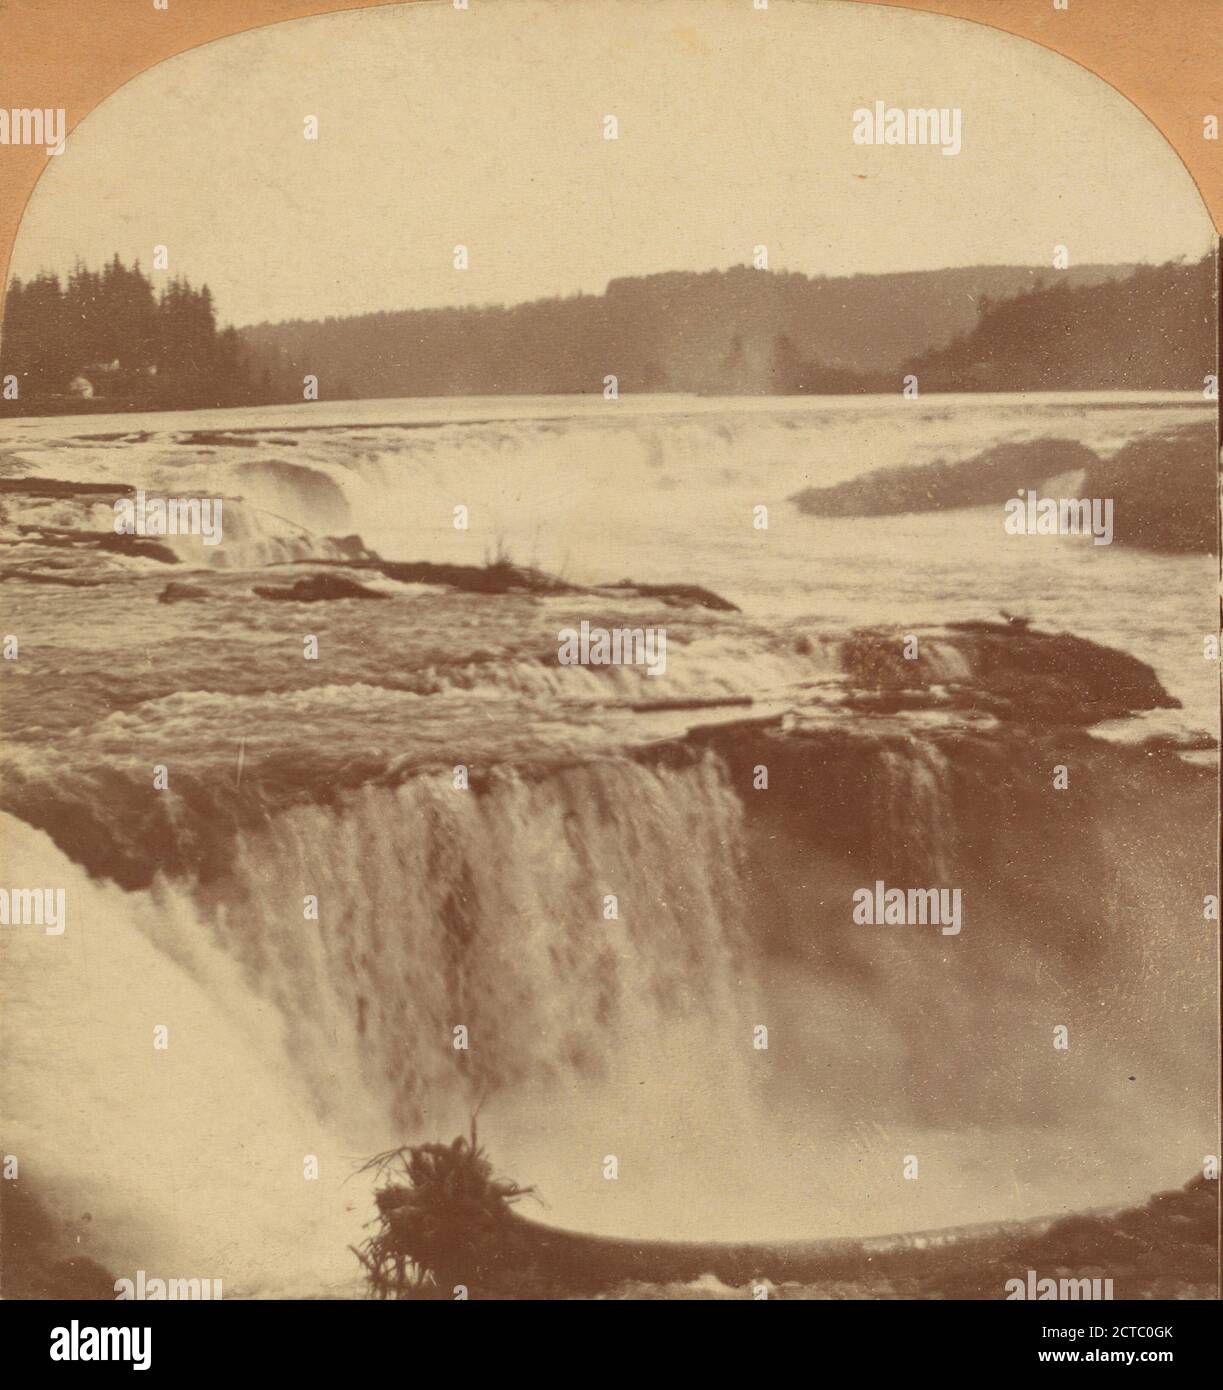 Falls of the Willamette at Oregon City, Oregon, U.S.A., Keystone View Company, Oregon Stock Photo